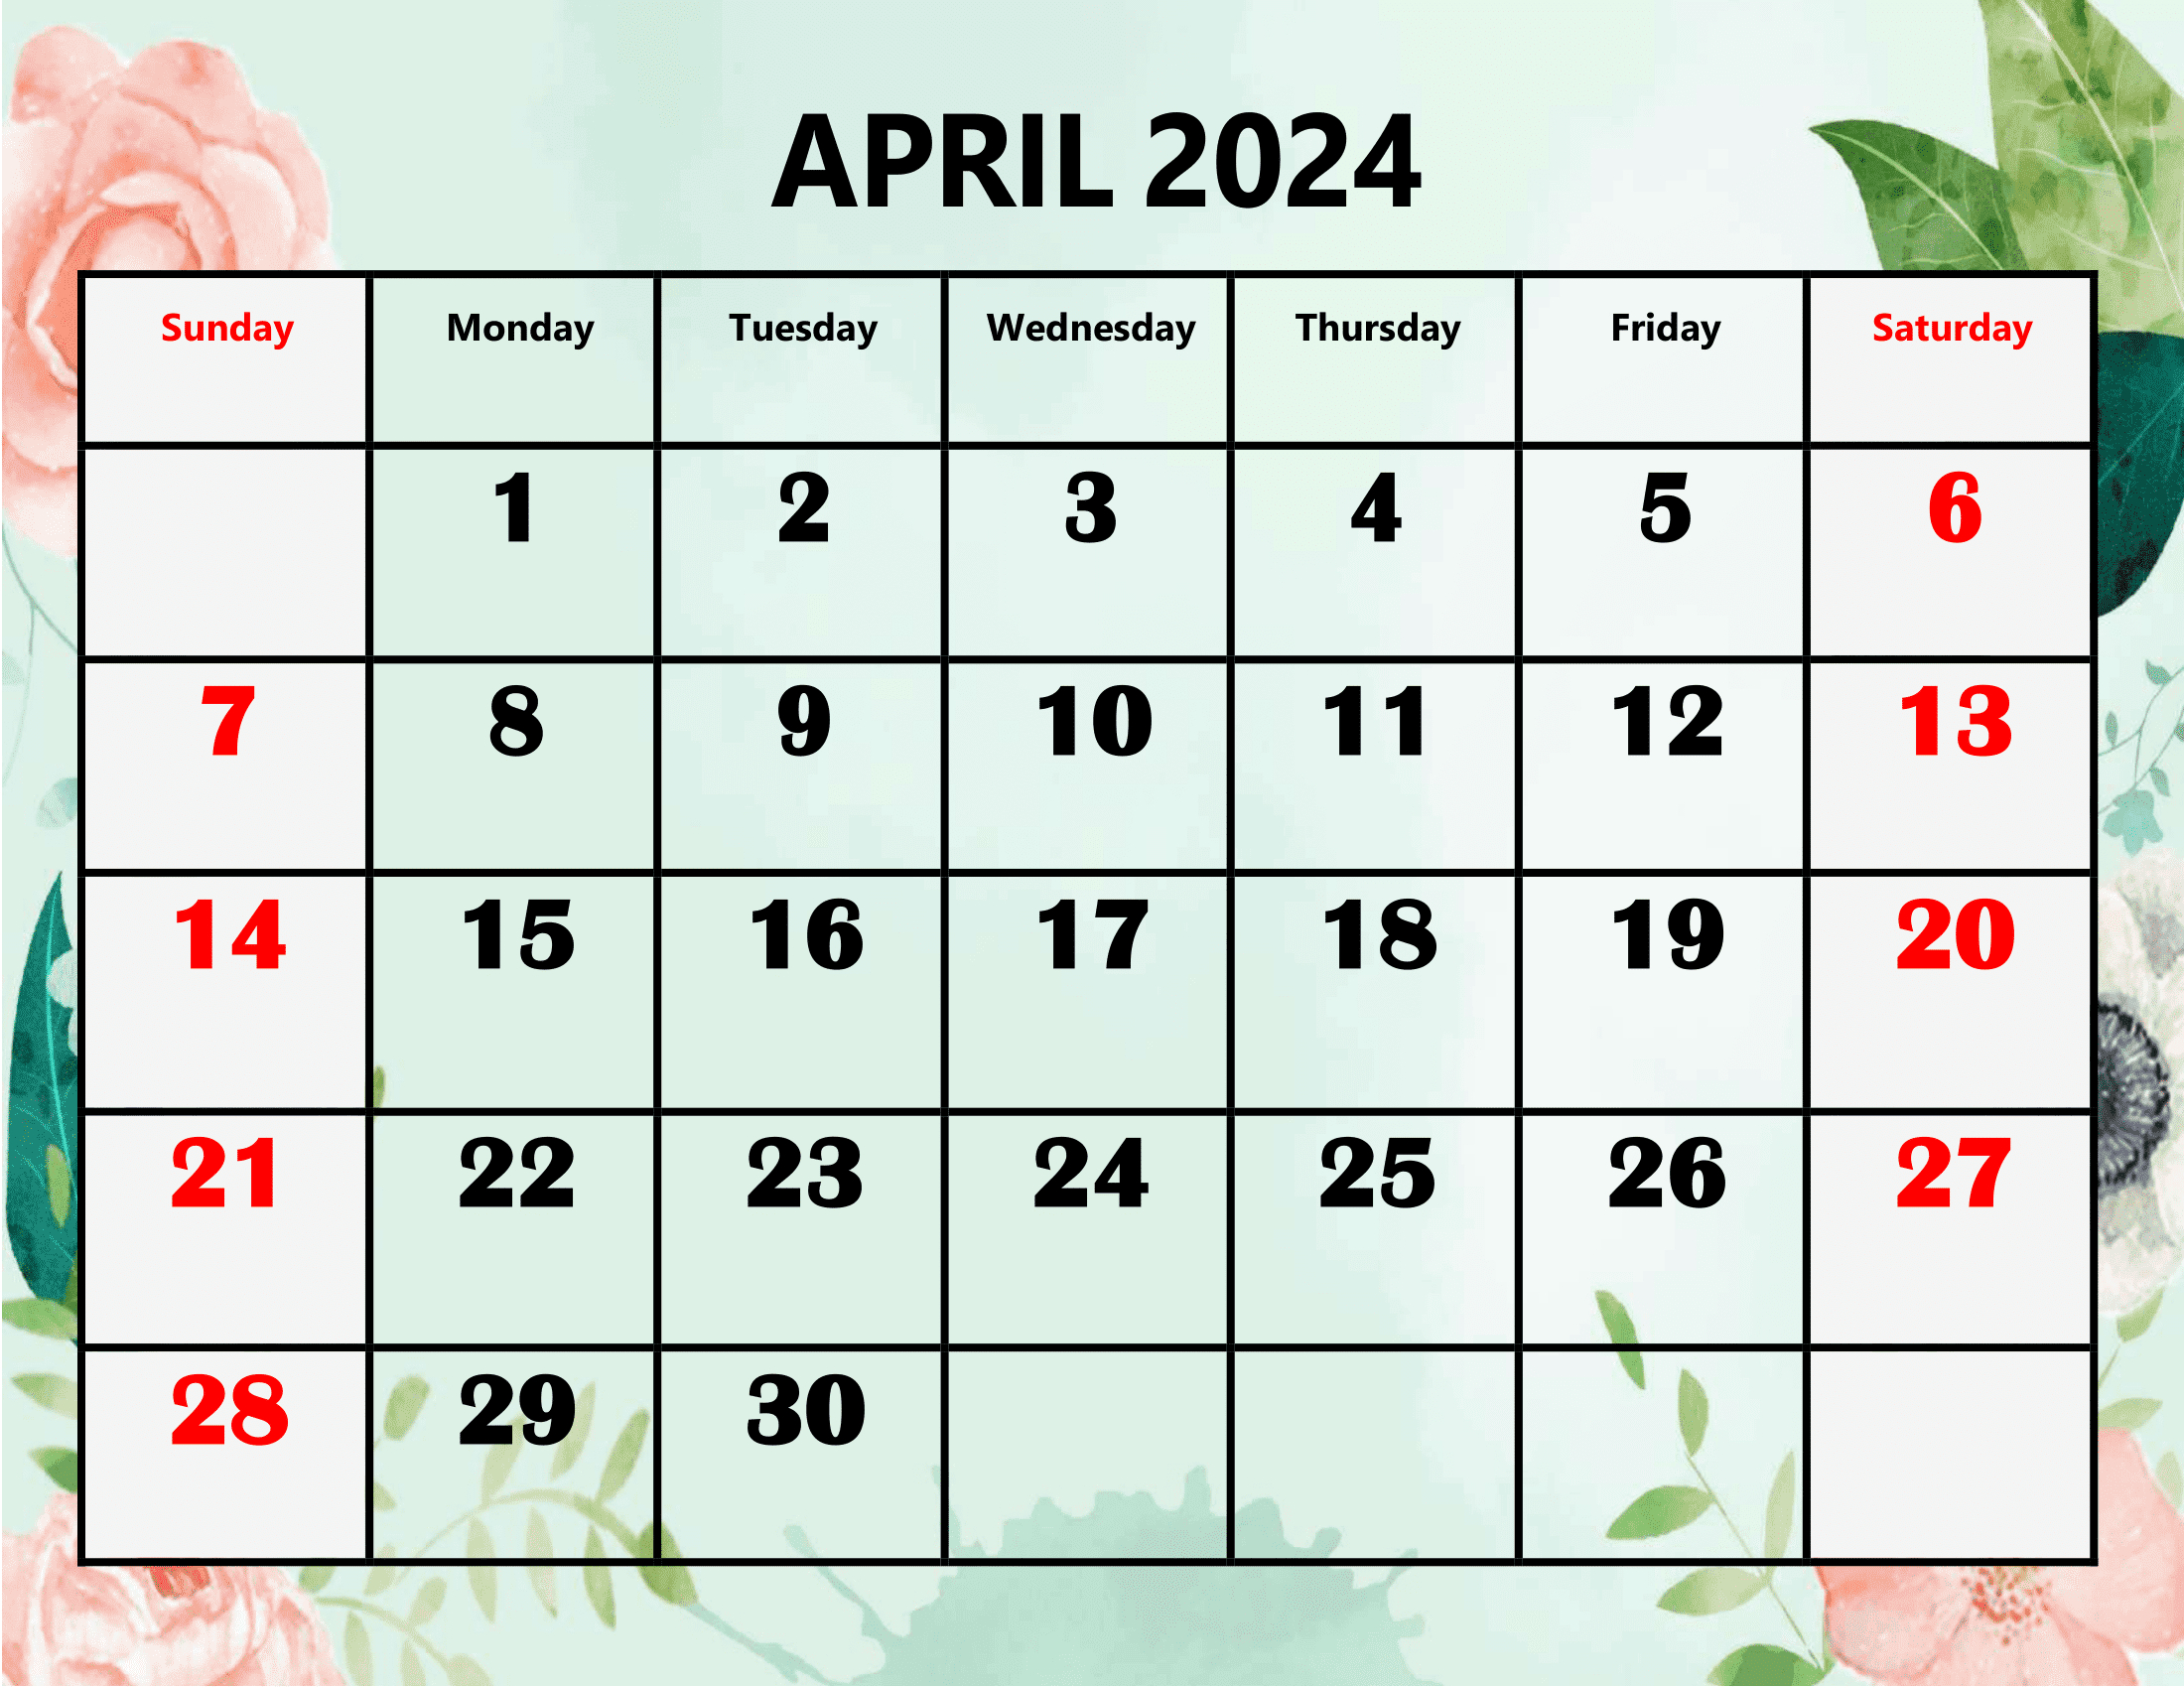 Blank April 2024 Calendar Printable Pdf Template With Holidays | Printable Calendar 2024 With Holidays Malaysia